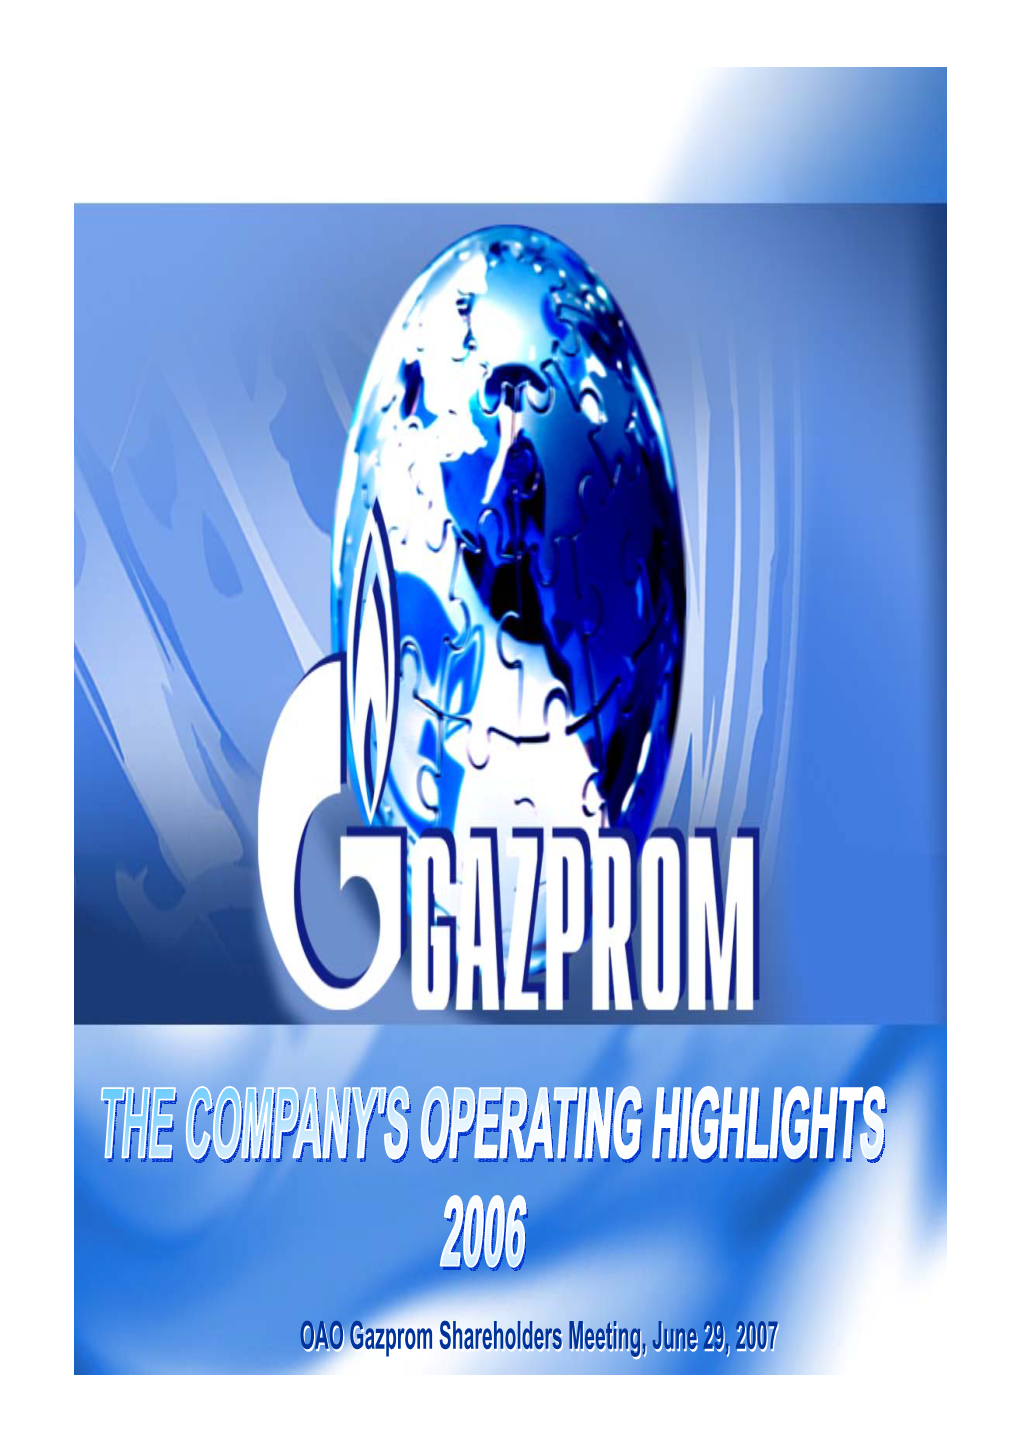 OAO Gazprom Shareholders Meeting, June 29, 2007